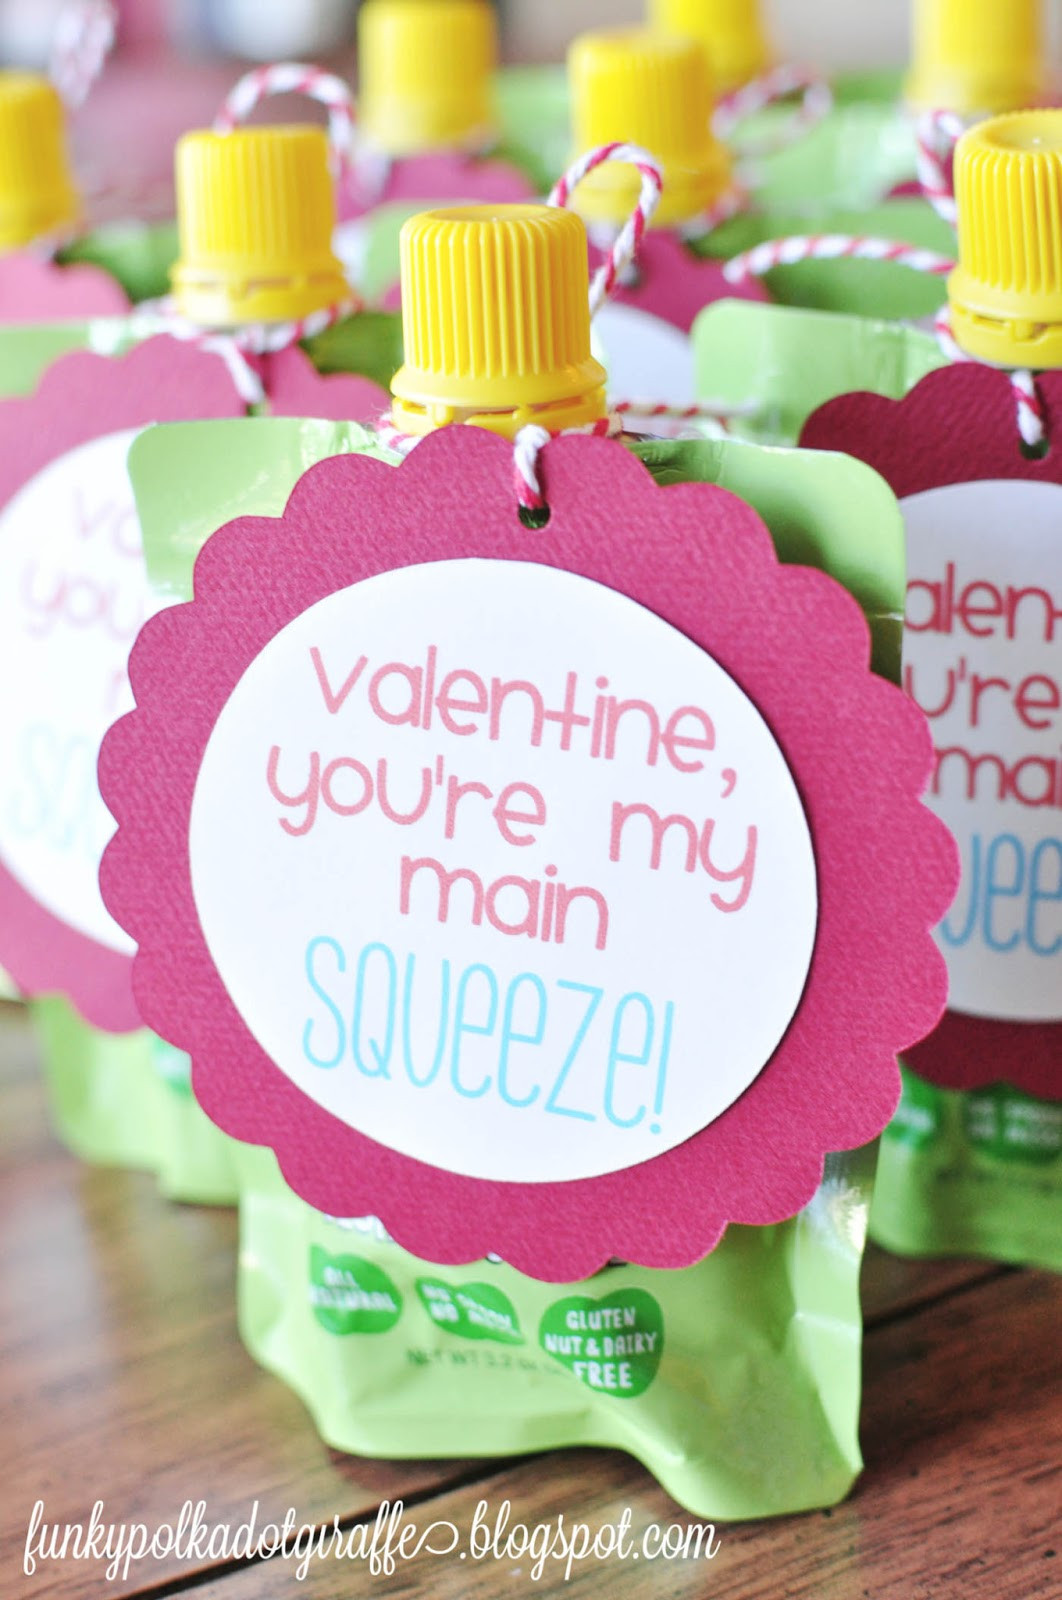 Best ideas about Preschool Valentine Gift Ideas
. Save or Pin Funky Polkadot Giraffe Preschool Valentines You re My Now.